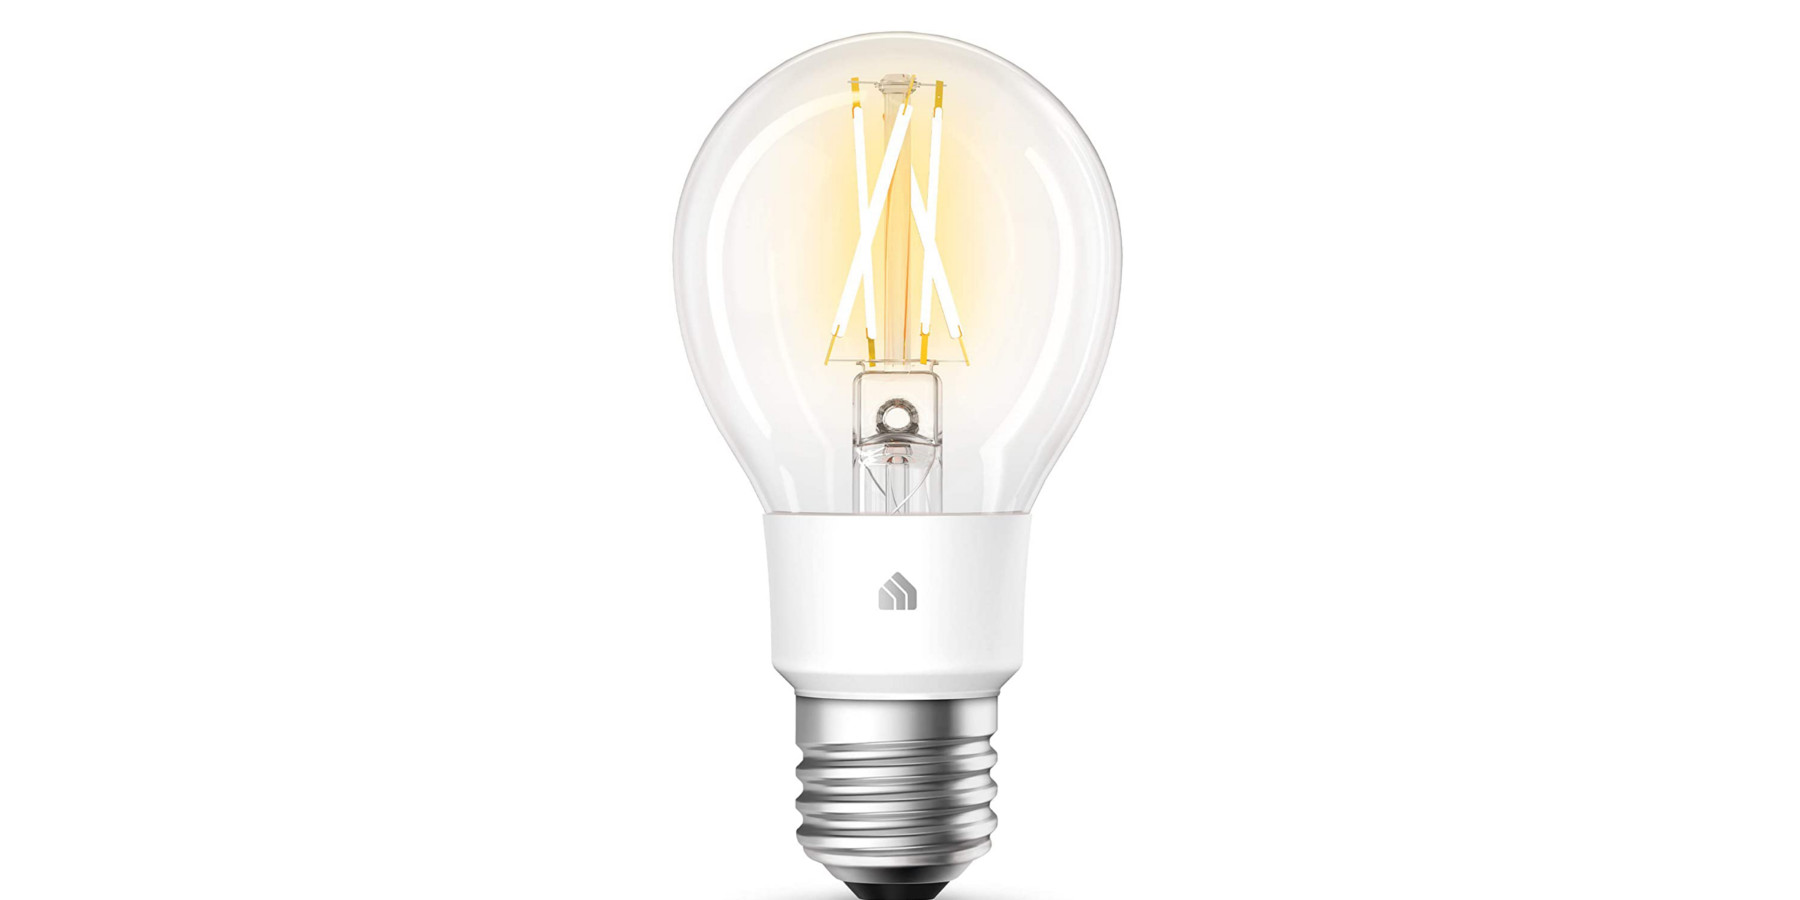 Add TP-Link Kasa Edison-style Smart Bulb your setup for just $9 Prime shipped (Reg. $14+)